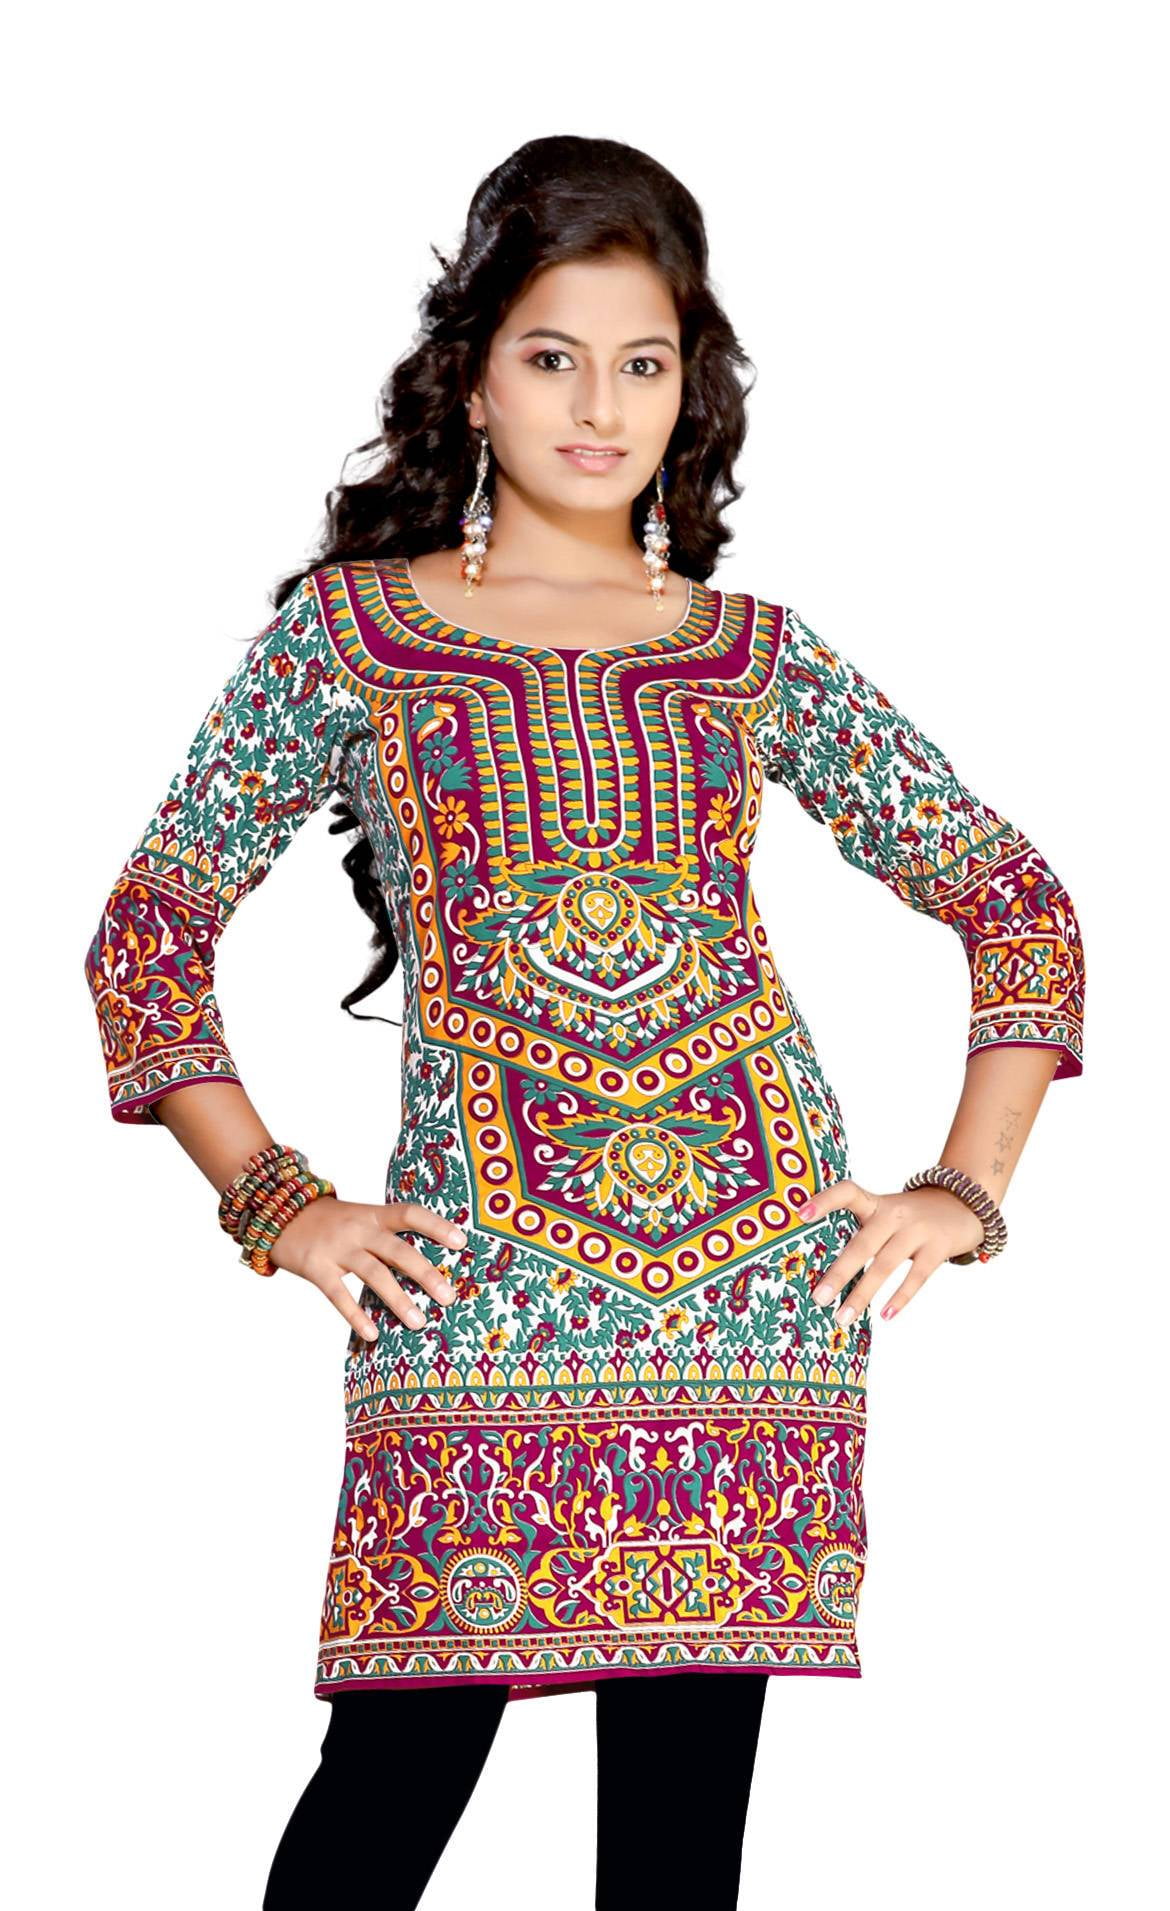 Ethnic Wear Filles Wear Top Indian Ladies Wear Cotton Short Kurti Casual Kurta 